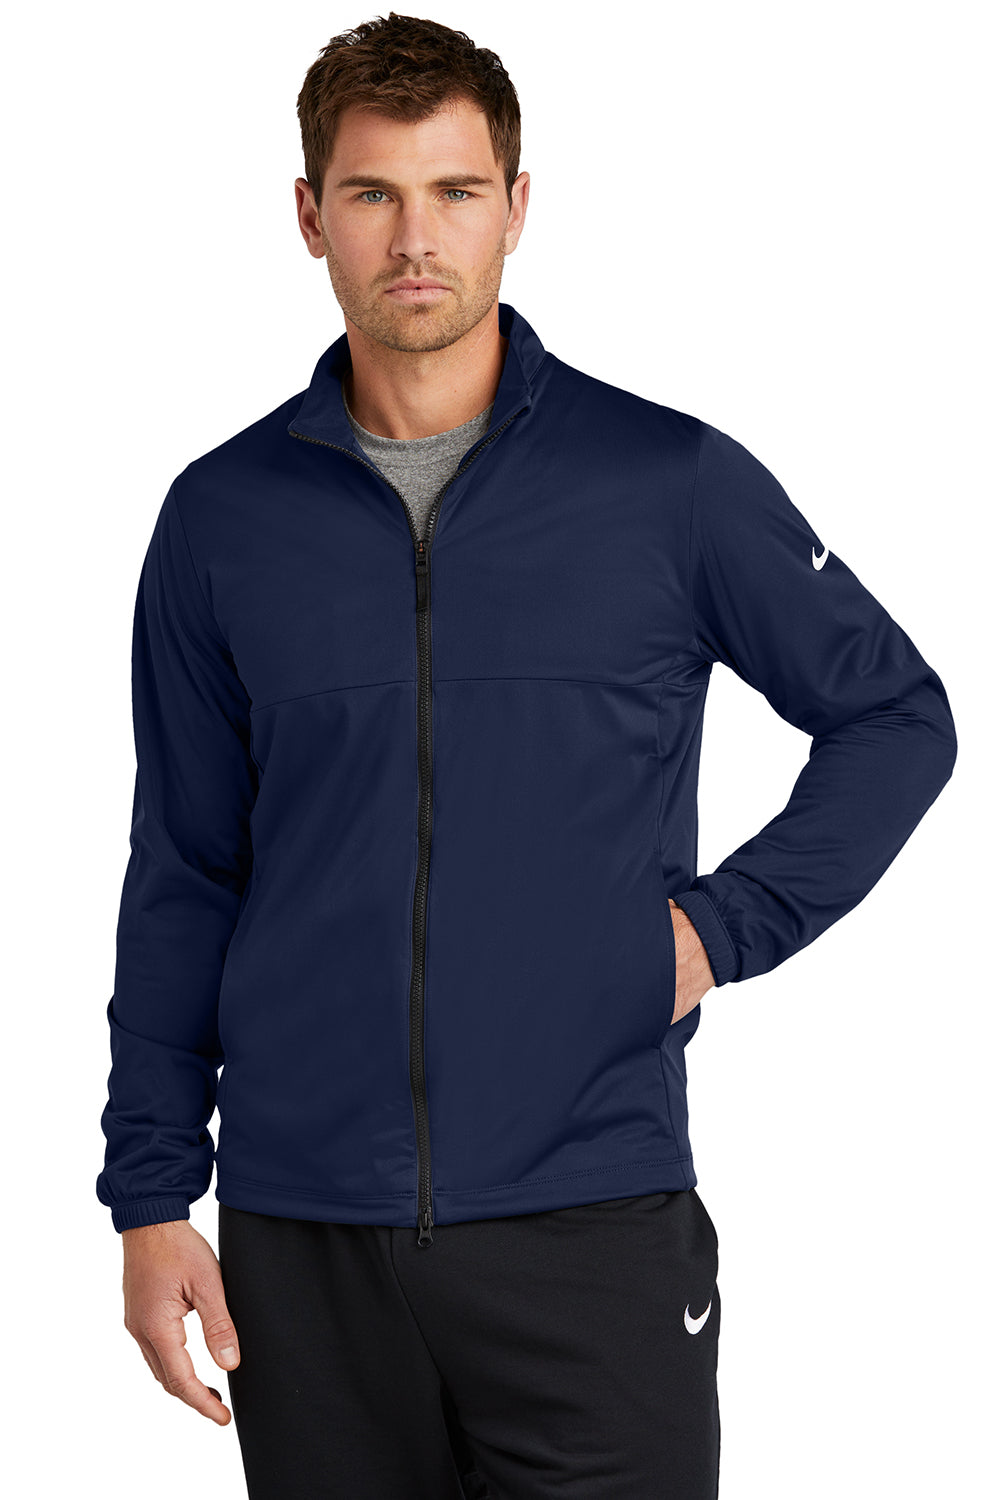 Nike NKDX6716 Mens Storm-Fit Wind & Water Resistant Full Zip Jacket College Navy Blue Model Front